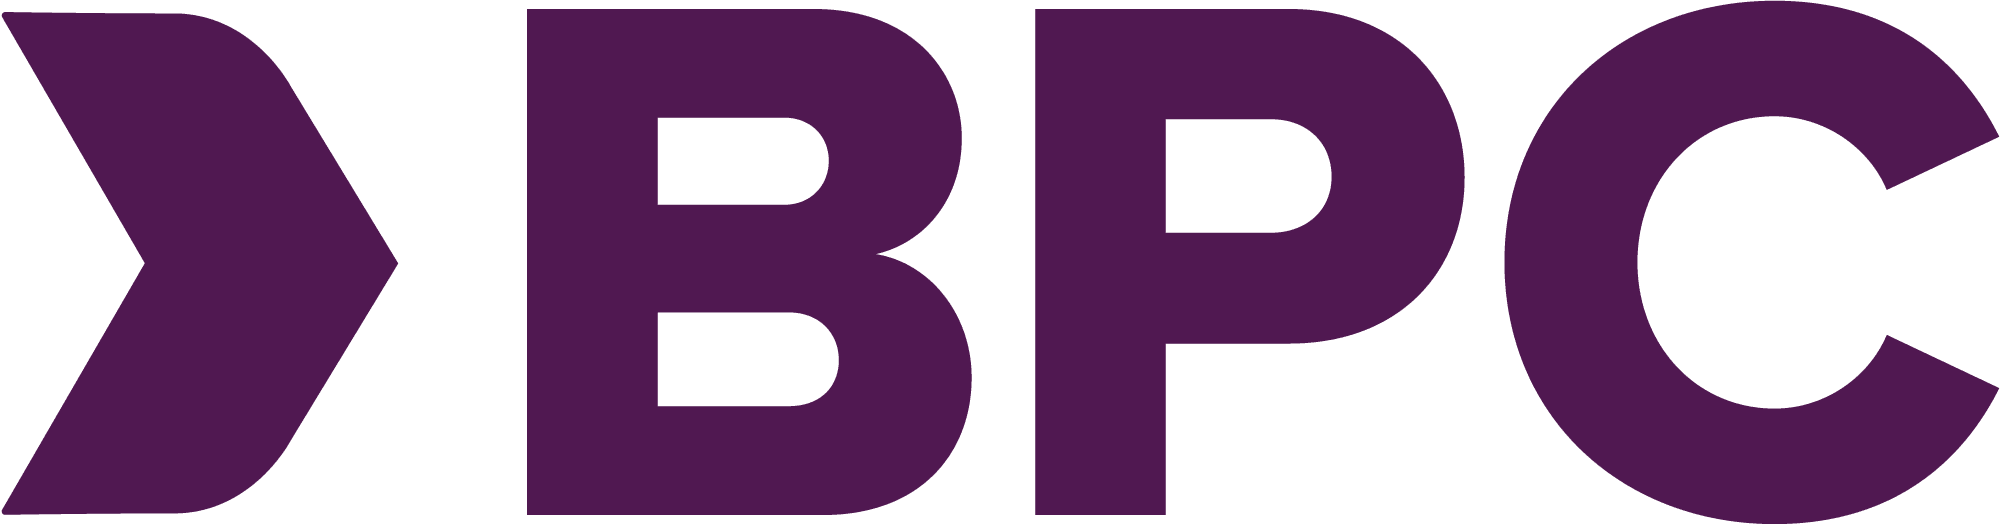 bpc-logo-2000x525-—-копия-2